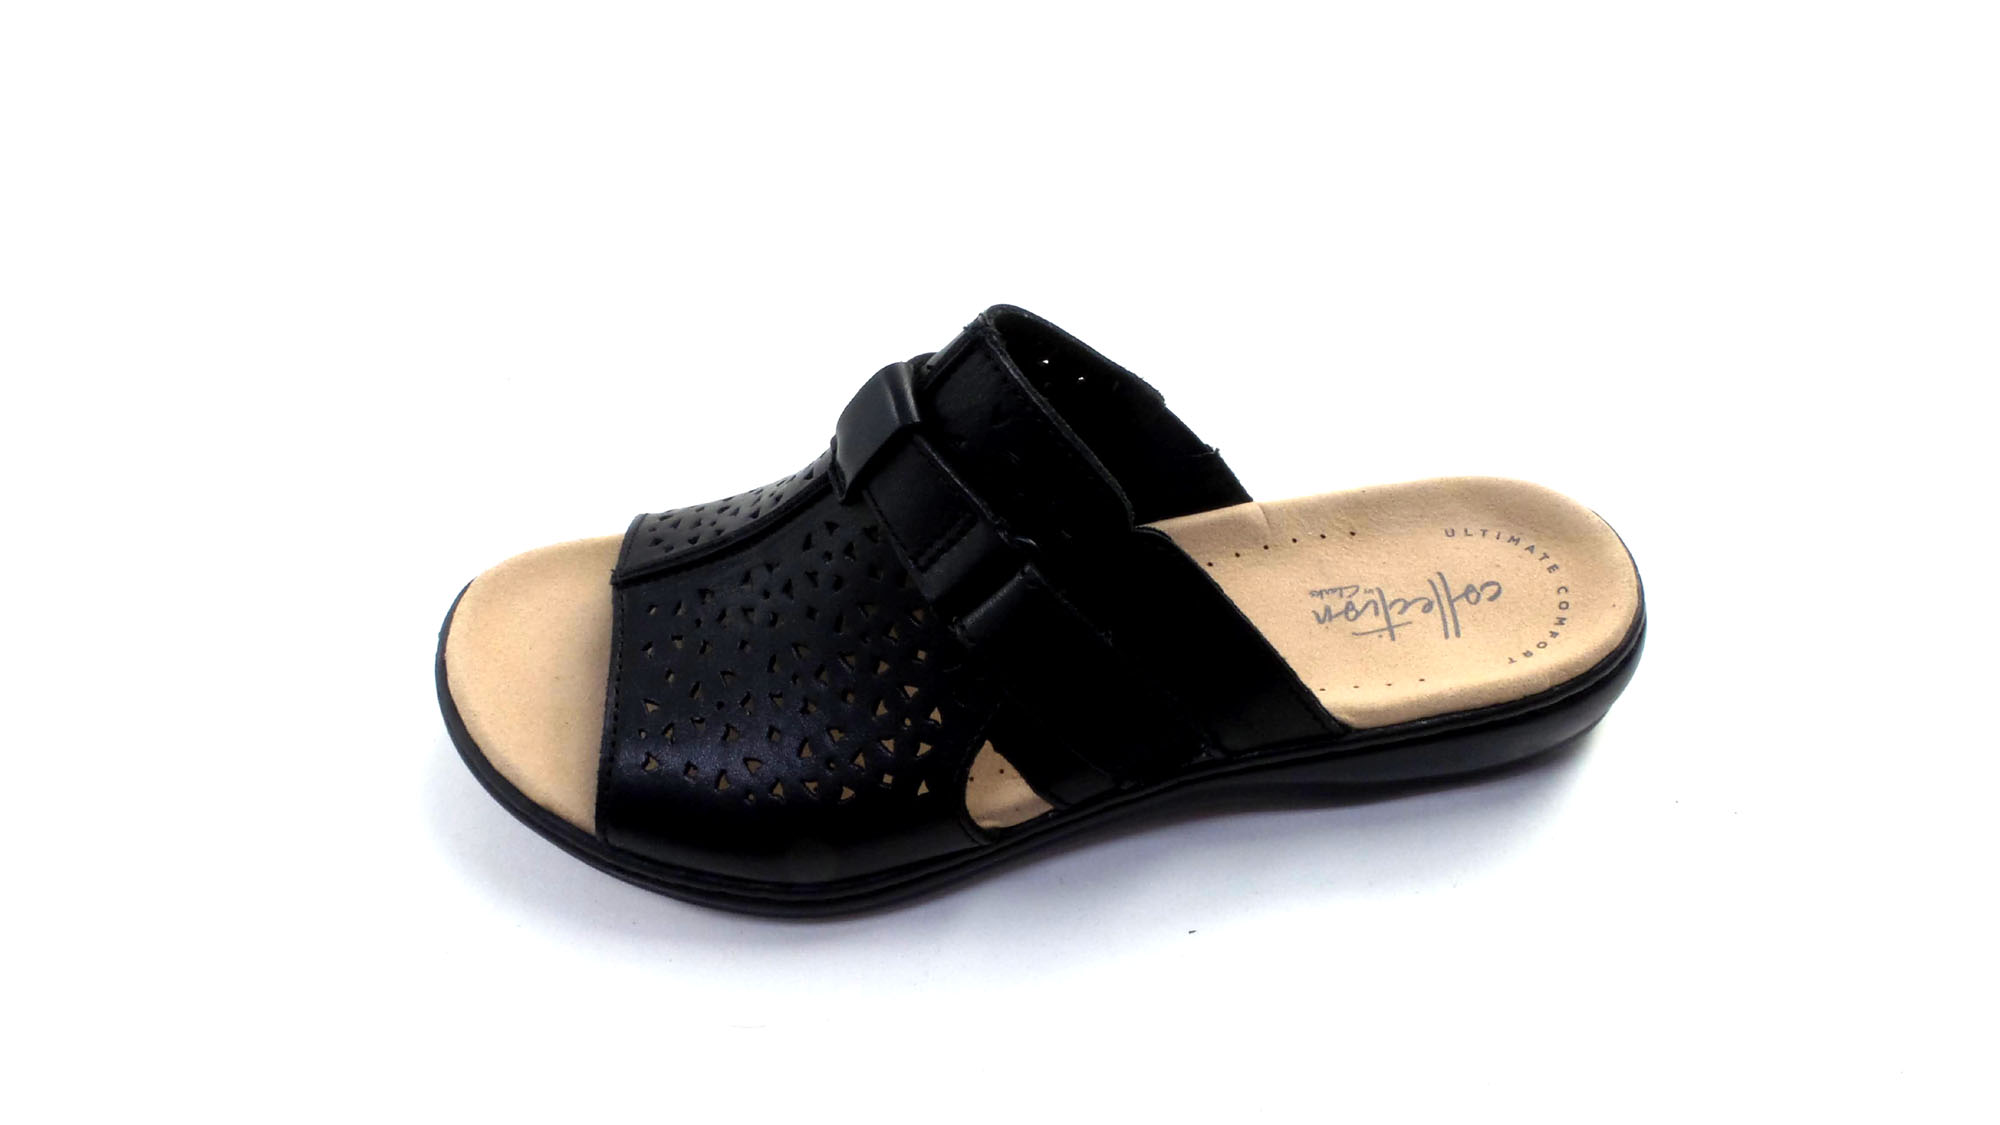 Clarks Collection Leather Slide Sandals Leisa Fox Black | eBay